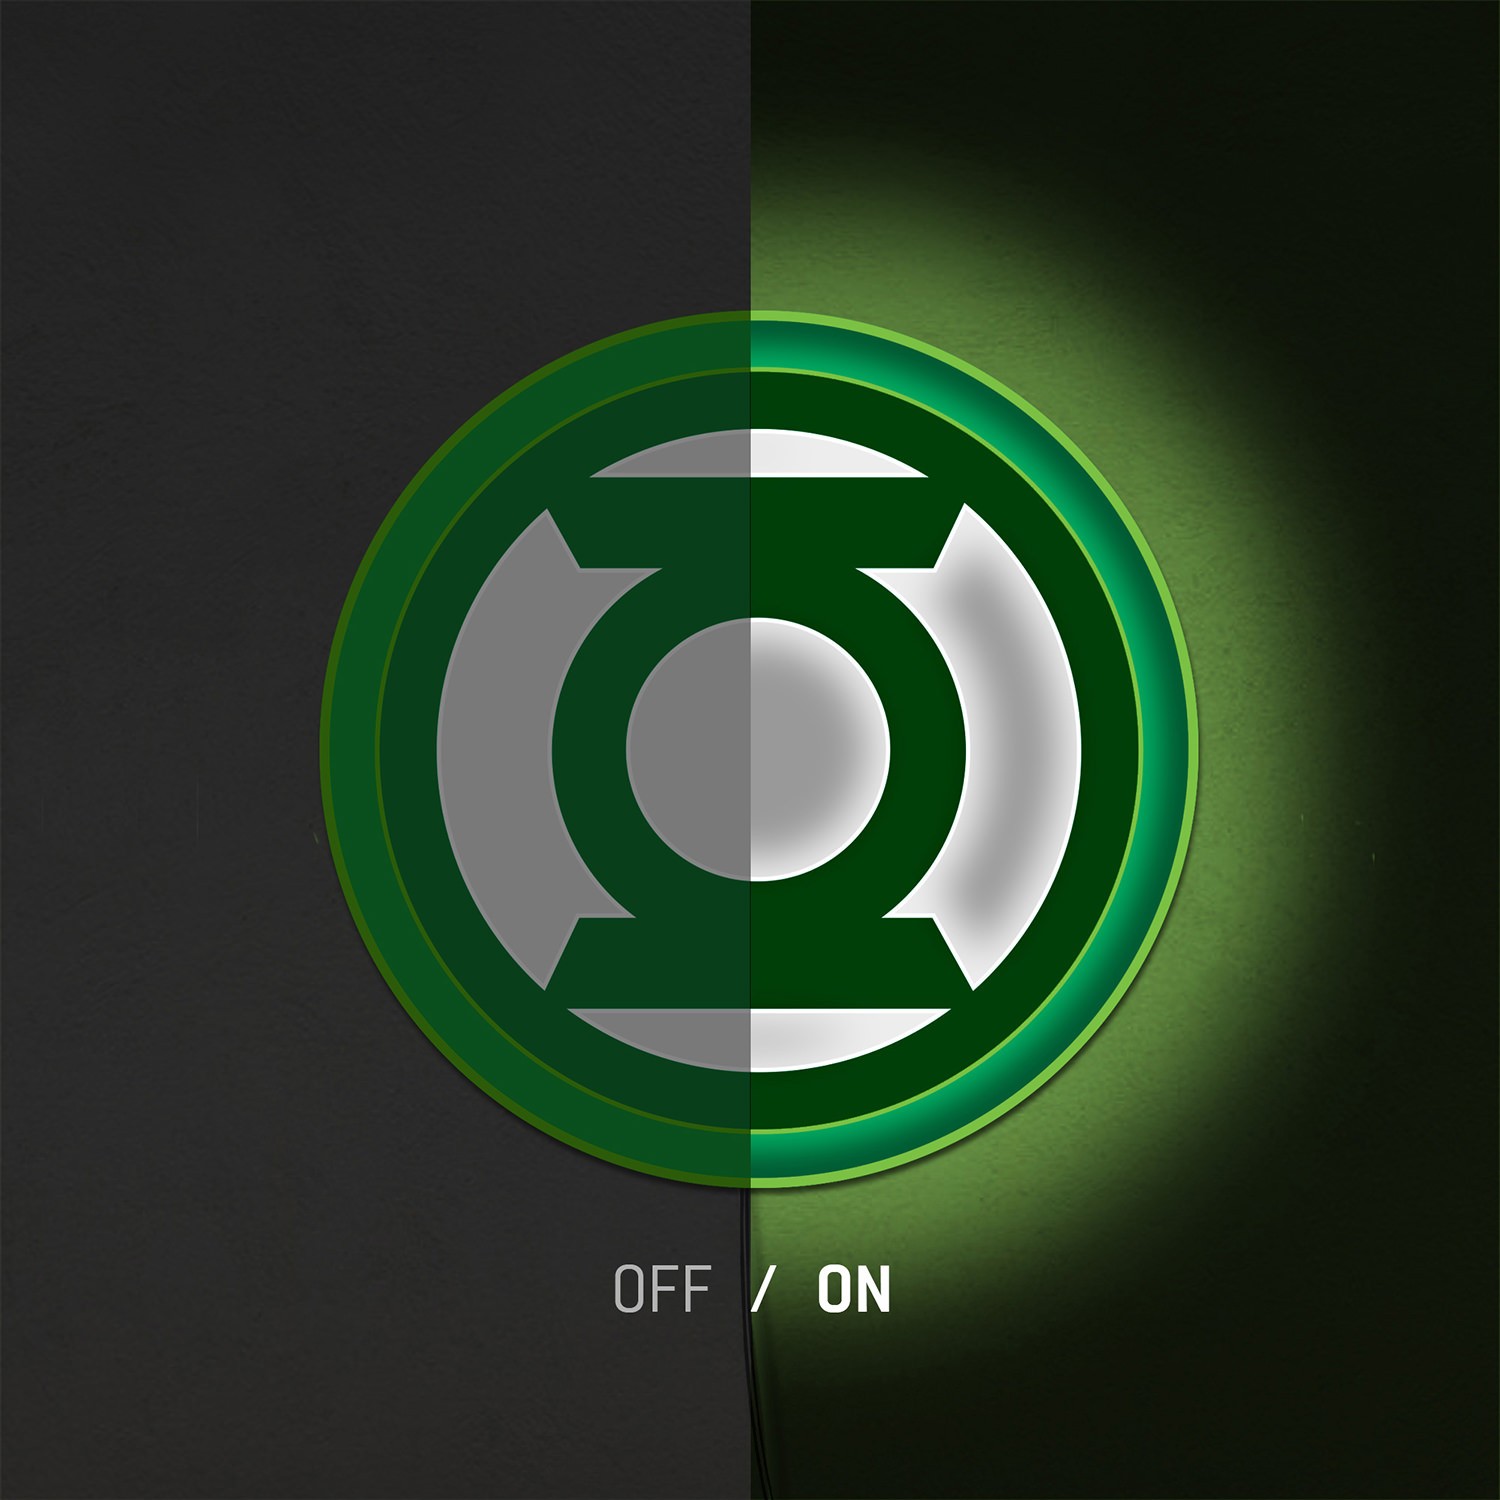 Green Lantern LED Logo Light (Regular) View 5